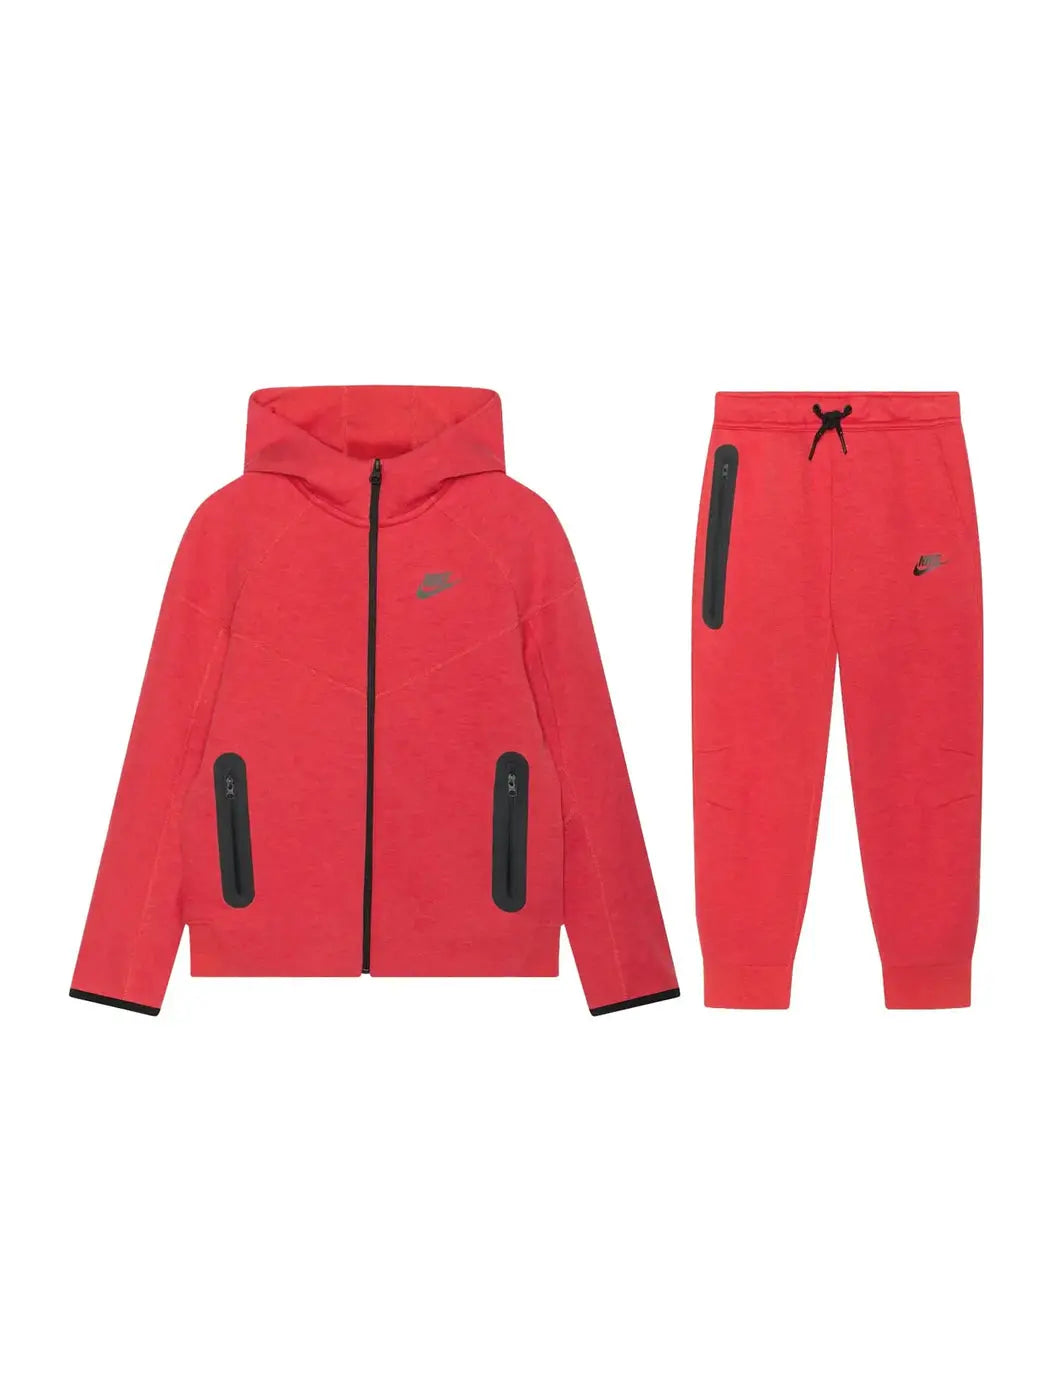 Nike Sportswear Tech Fleece Full-Zip Hoodie & Joggers Set Light University Red Heather/Black/Black in Melbourne, Australia - Prior